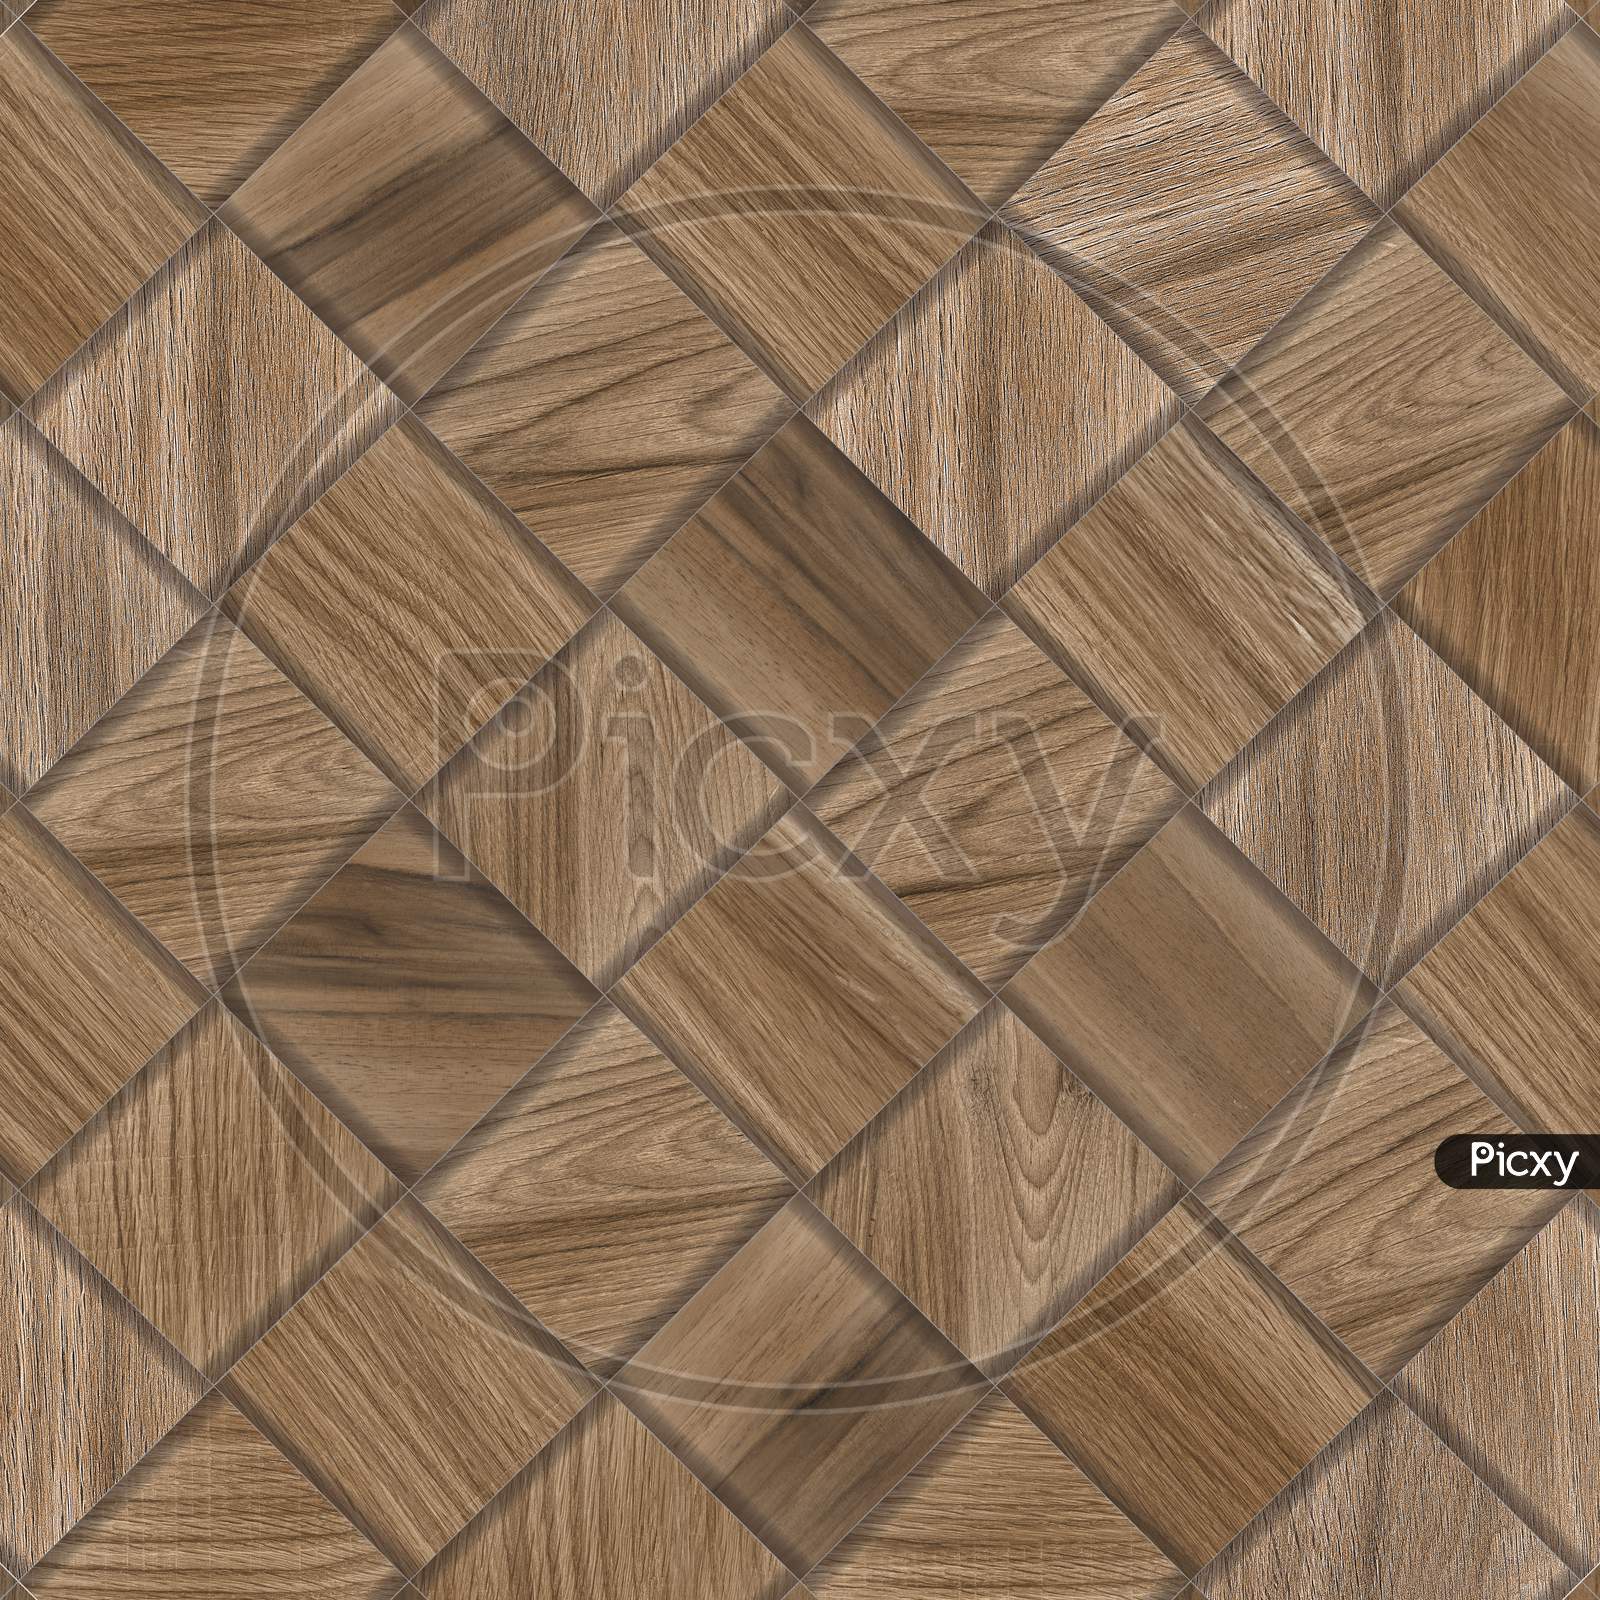 Wooden Geometric Shapes 3D Chex Pattern Tile.